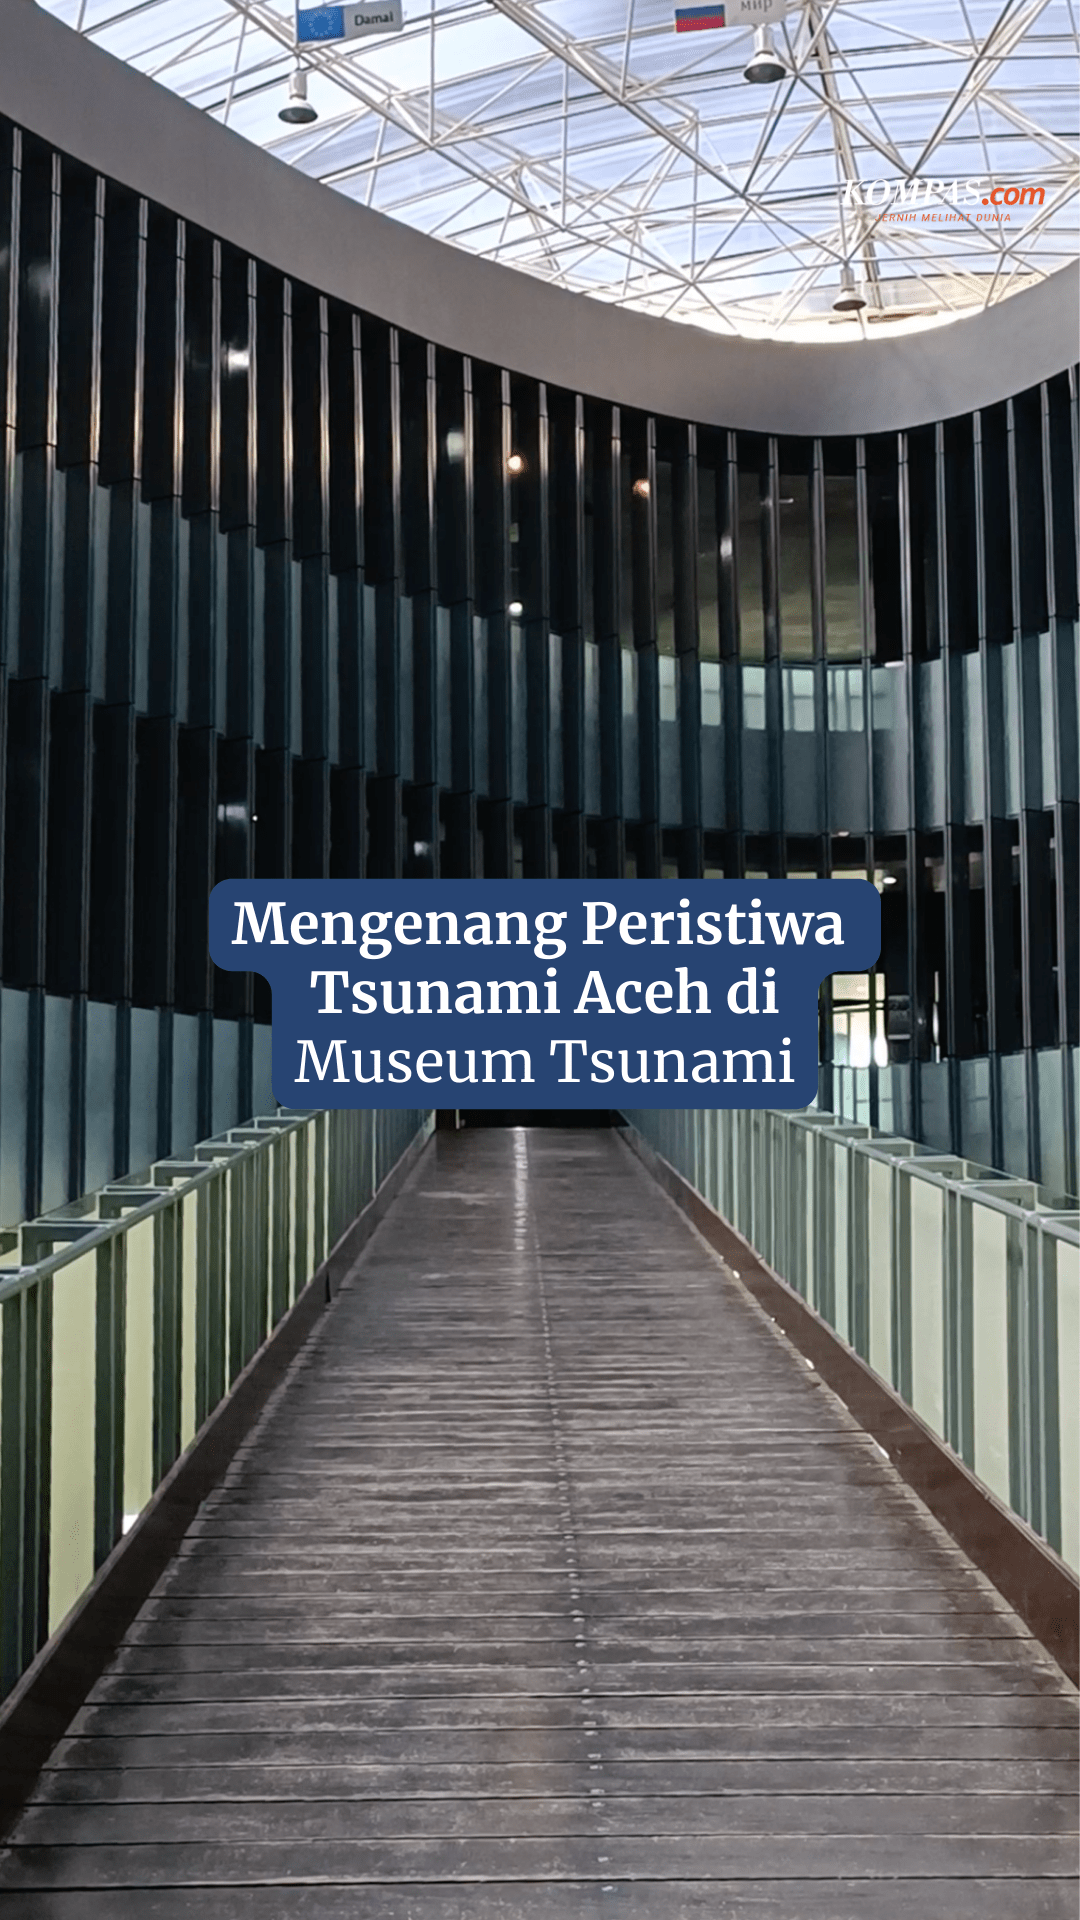 Mengenang Peristiwa Tsunami Aceh di Museum Tsunami